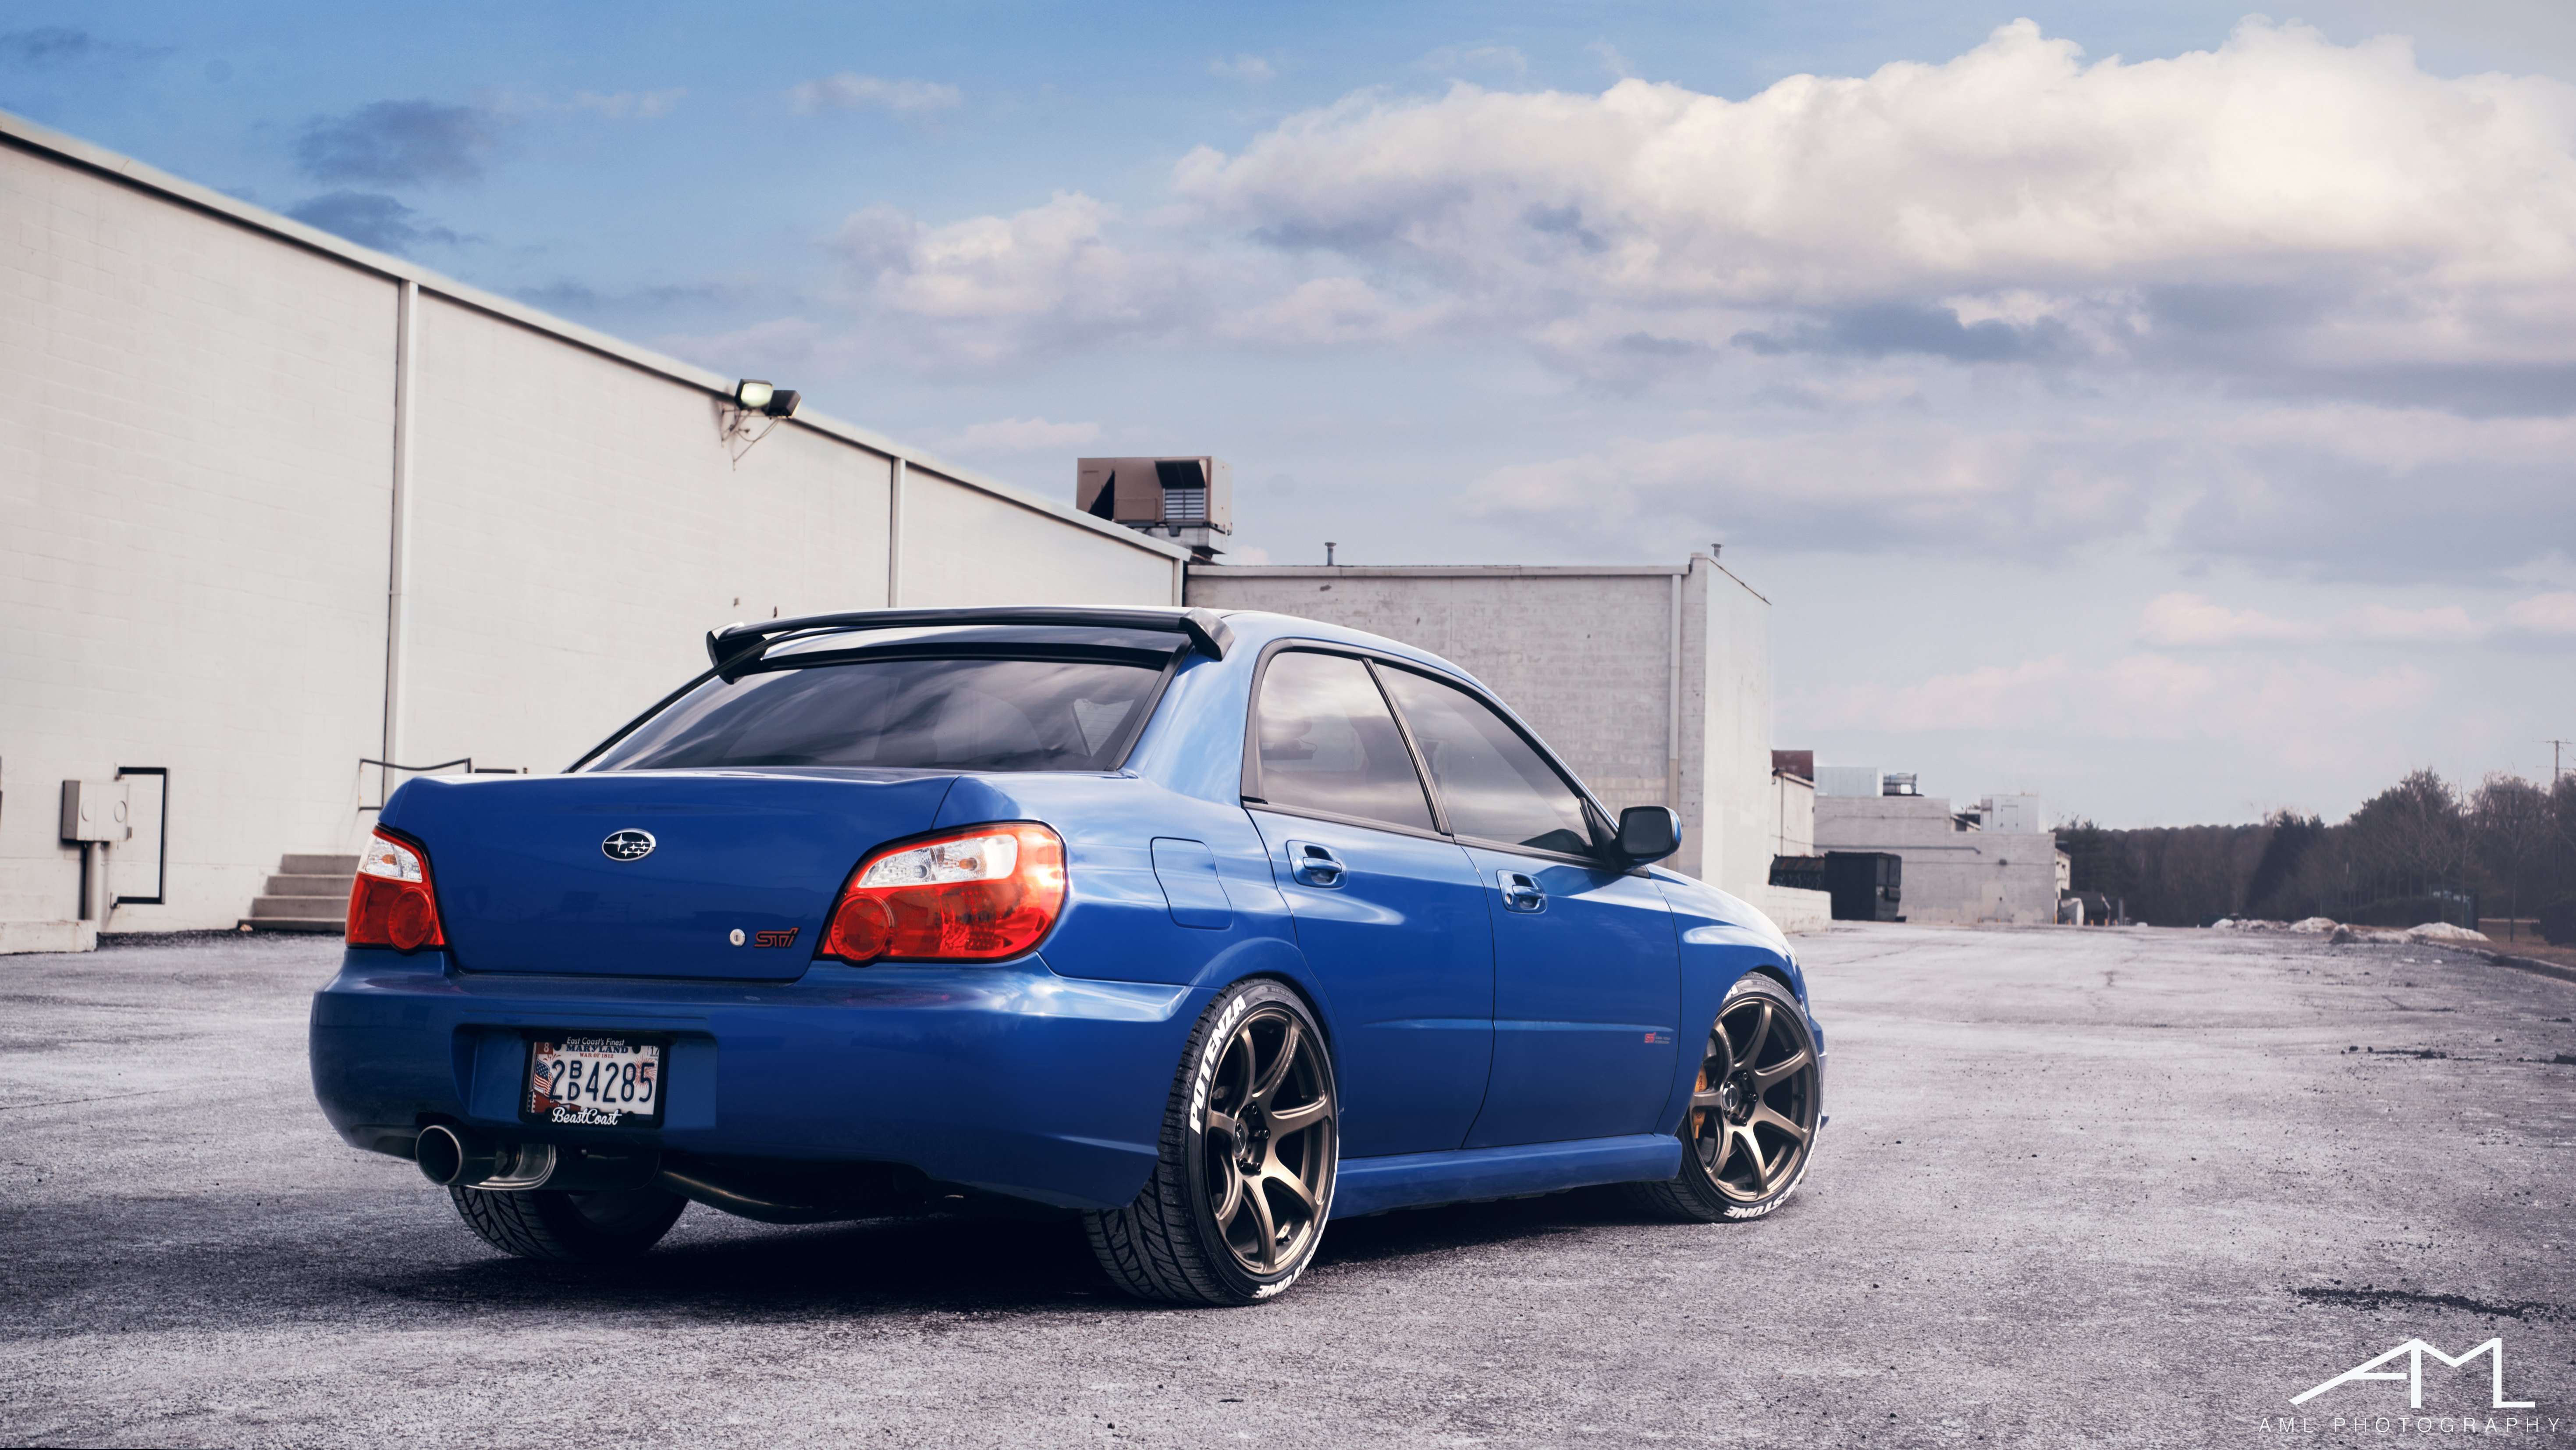 Blue Subaru WRX STI with Custom Exhaust System - Photo by Arlen Liverman